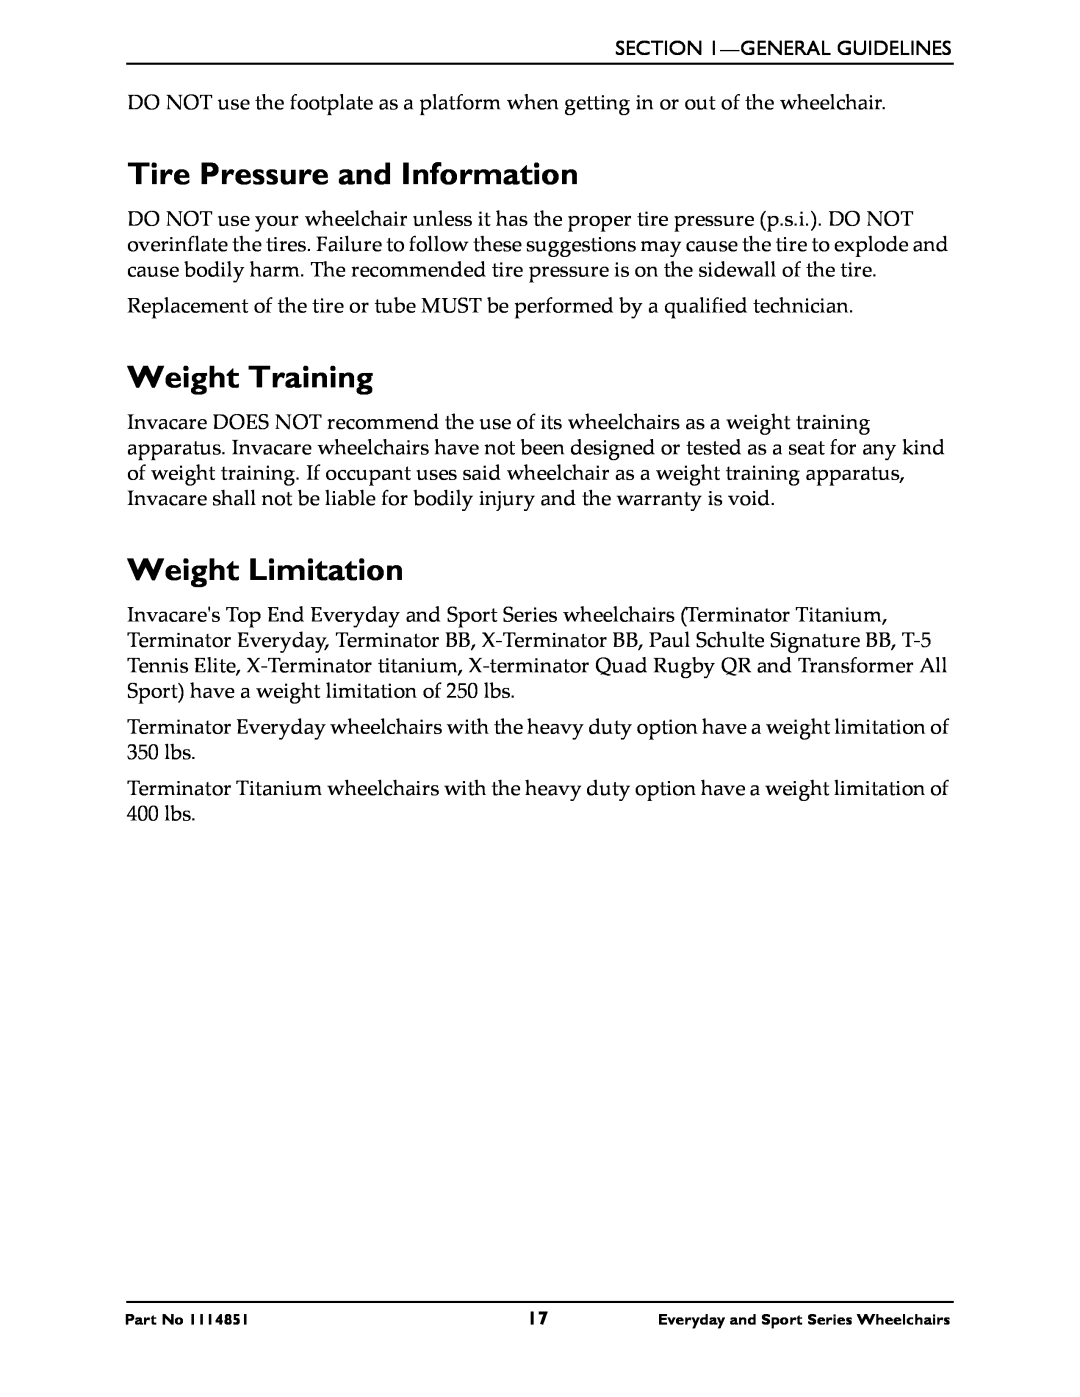 Invacare X-Terminator QR, X-Terminator Titanium, 1114851 Tire Pressure and Information, Weight Training, Weight Limitation 